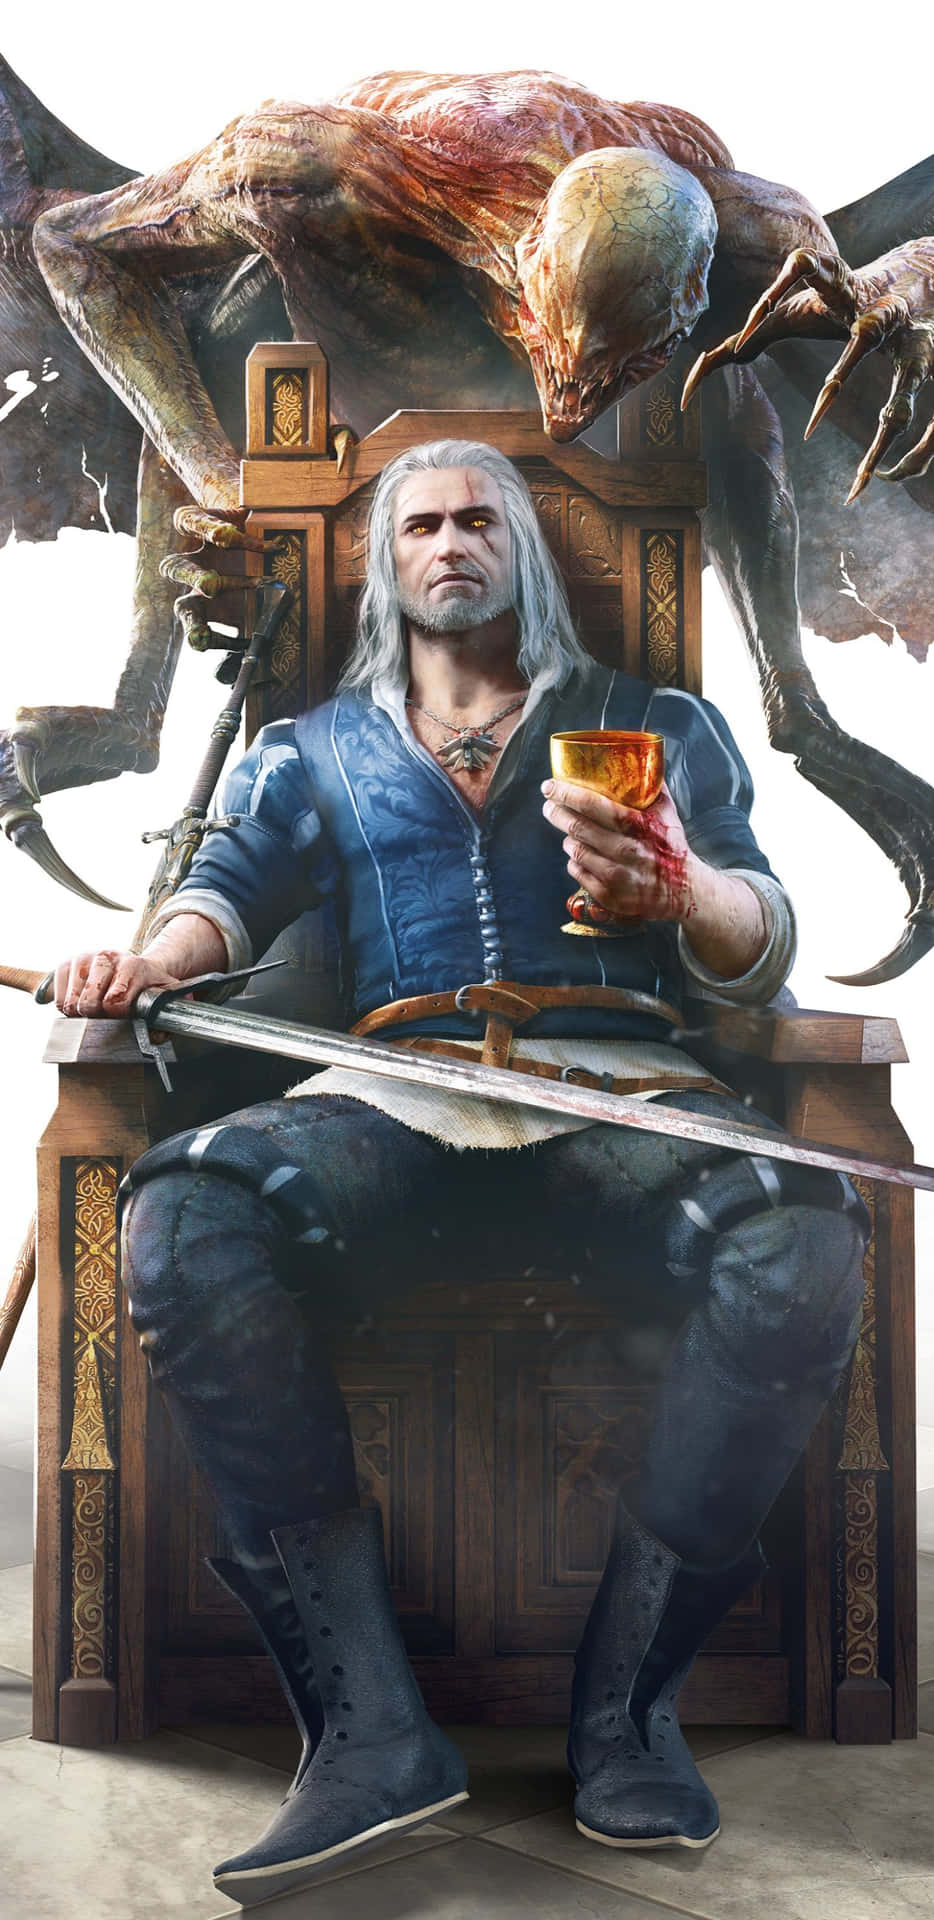 Pixel3xl Bakgrund Geralt Of Rivia Från The Witcher 3.